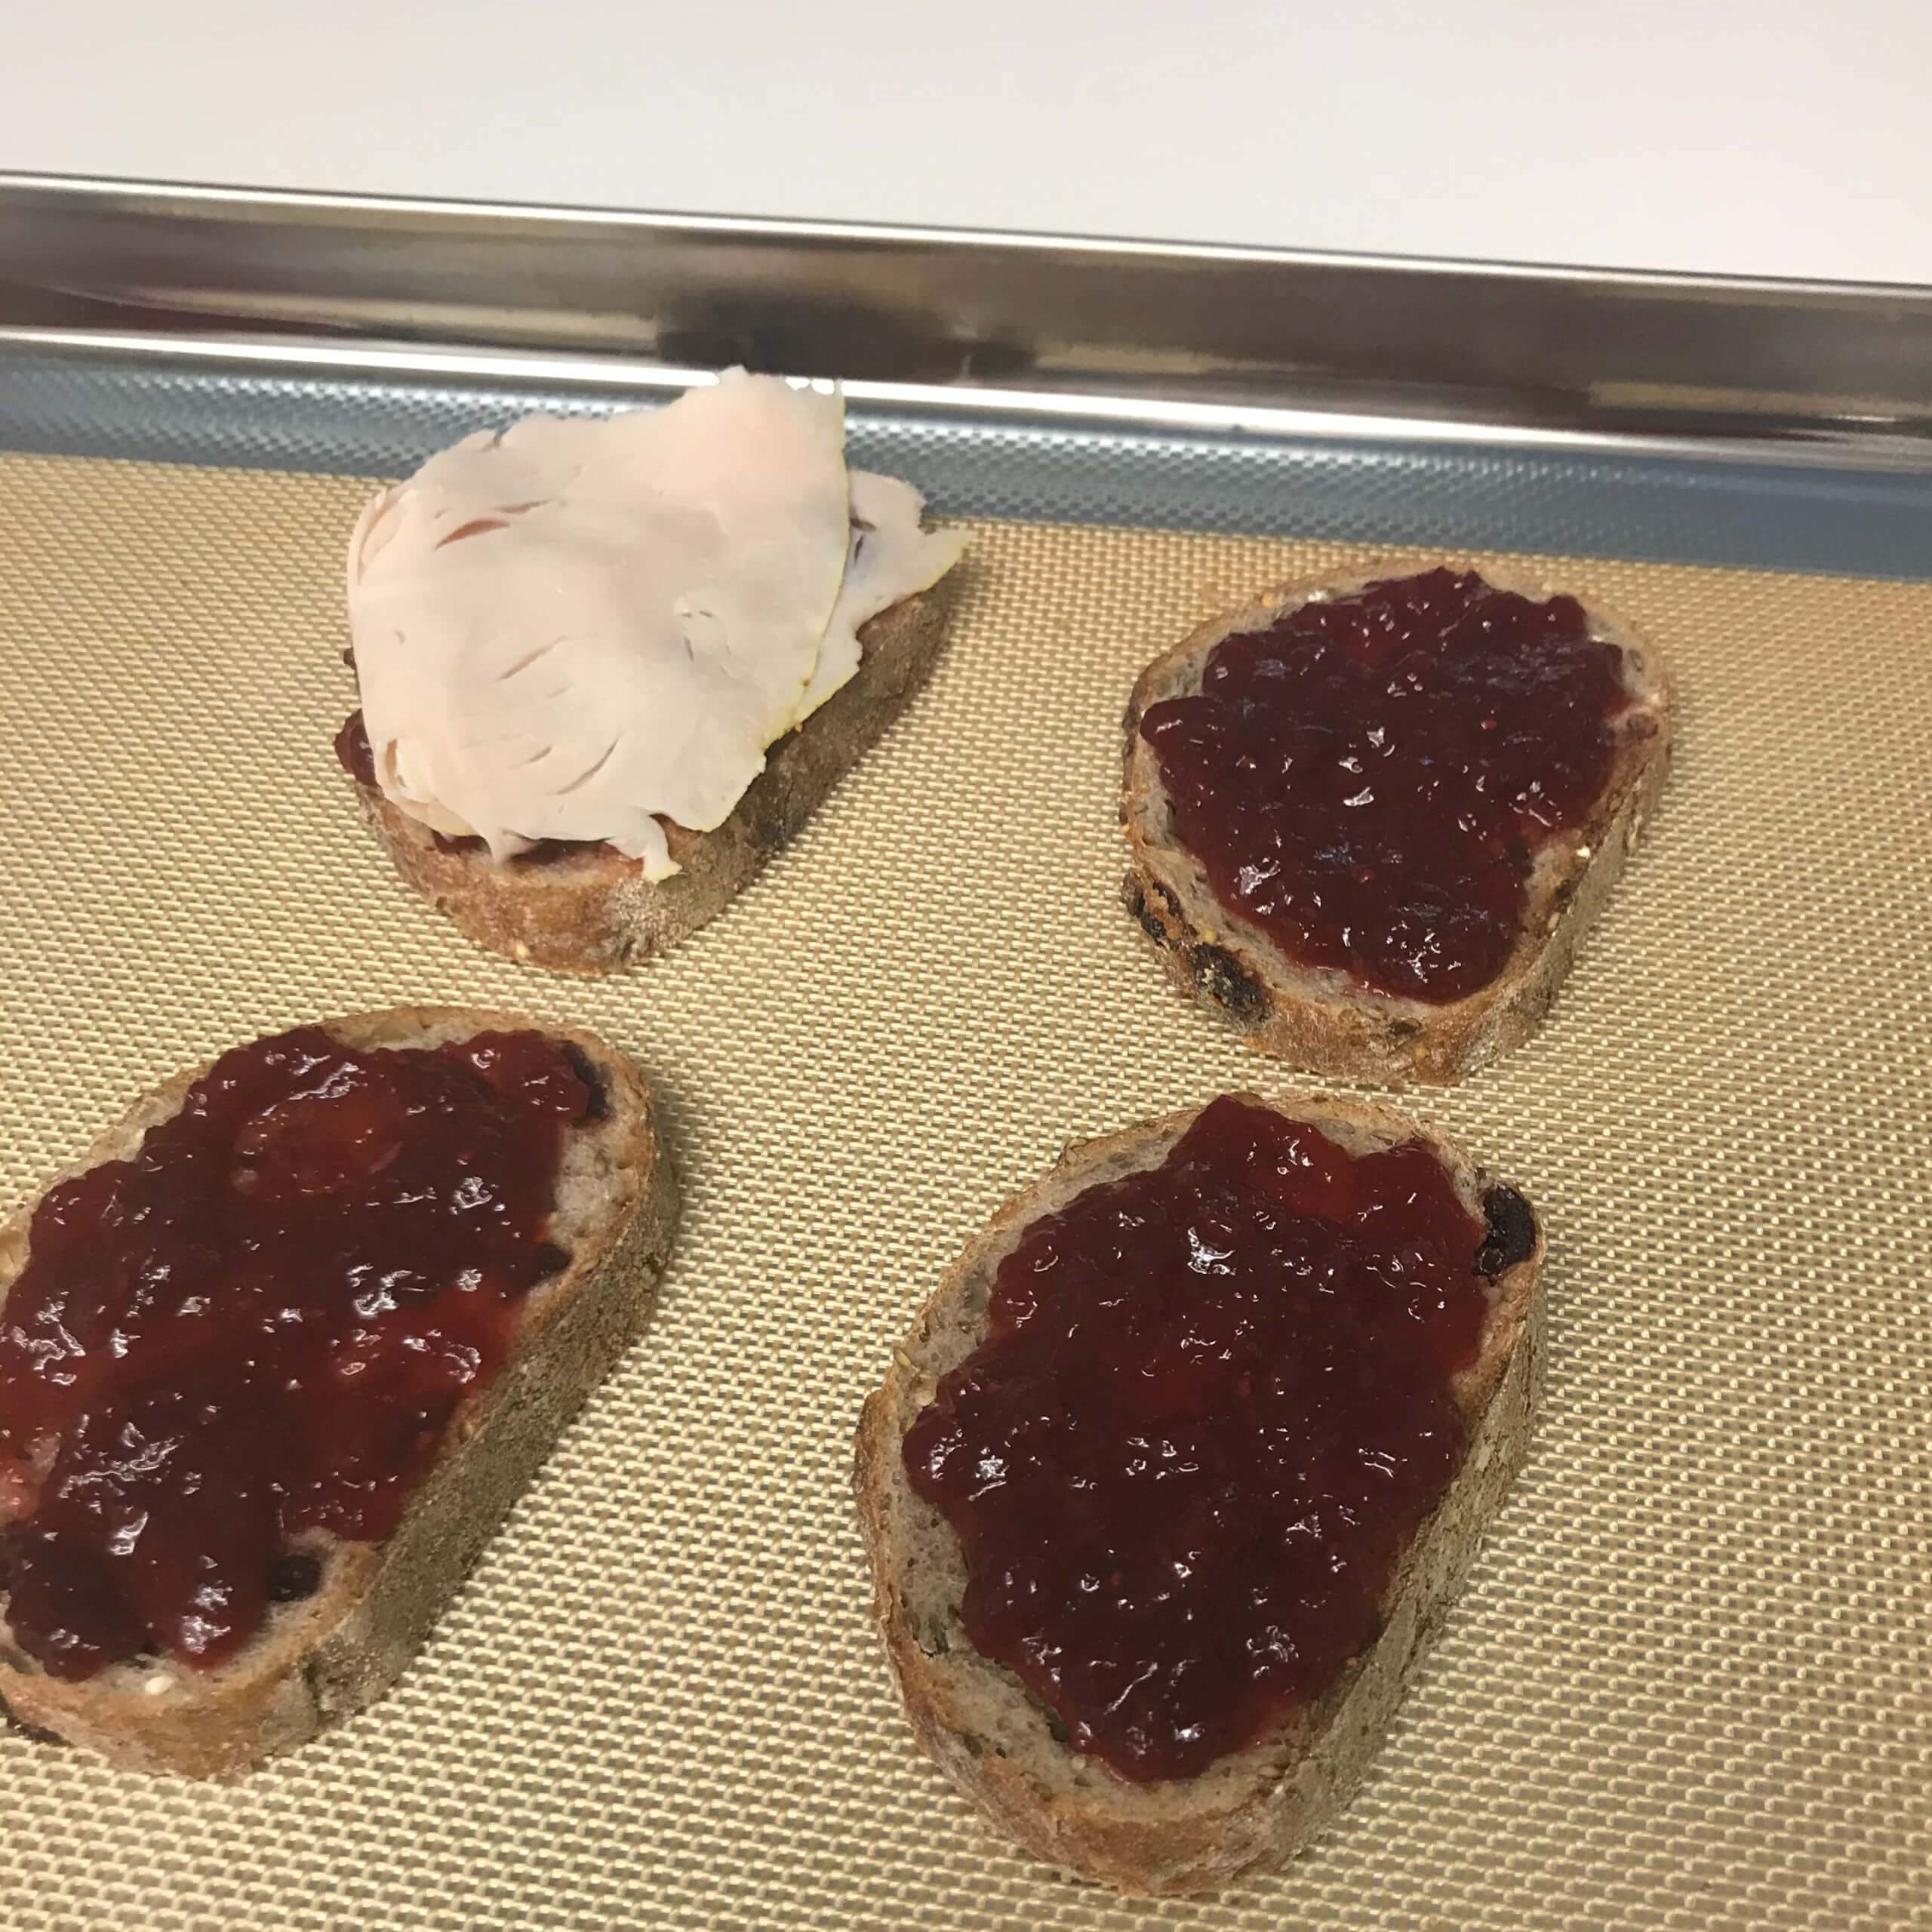 Turkey & Brie bites with Raspberry Sriracha Jam on Walnut Raisin Bread | My Curated Tastes